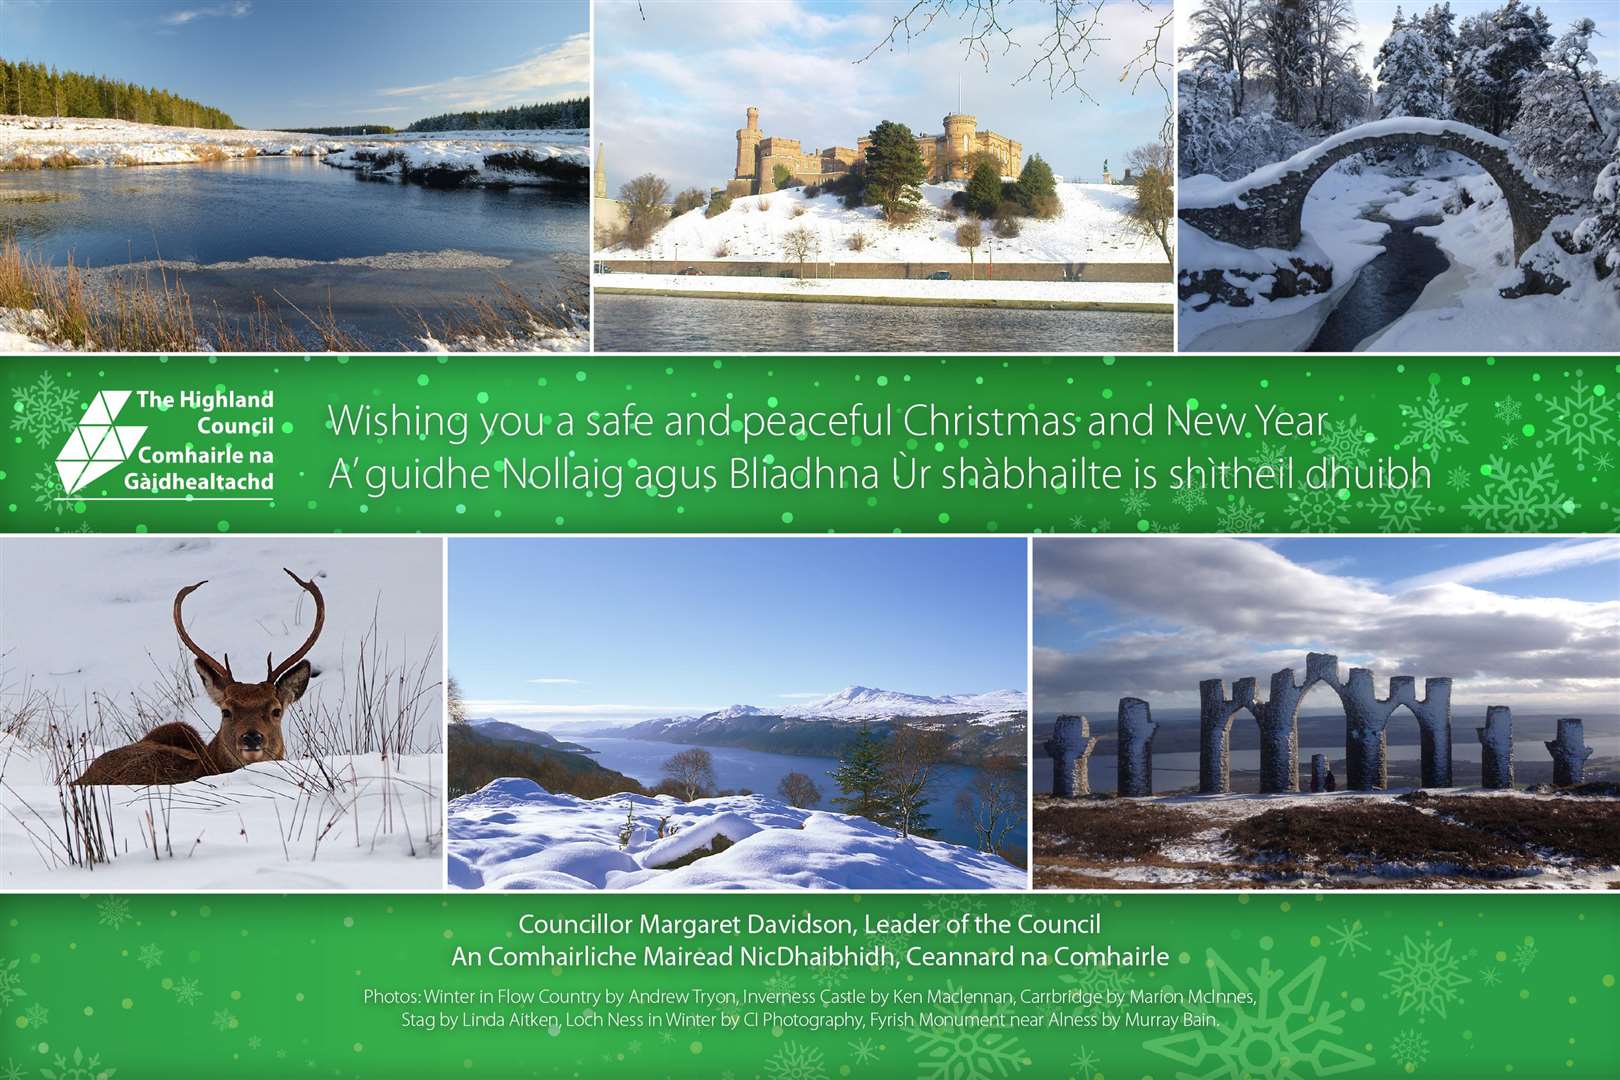 Snowy Highland landscapes on the card sent by Highland Council leader Margaret Davidson.